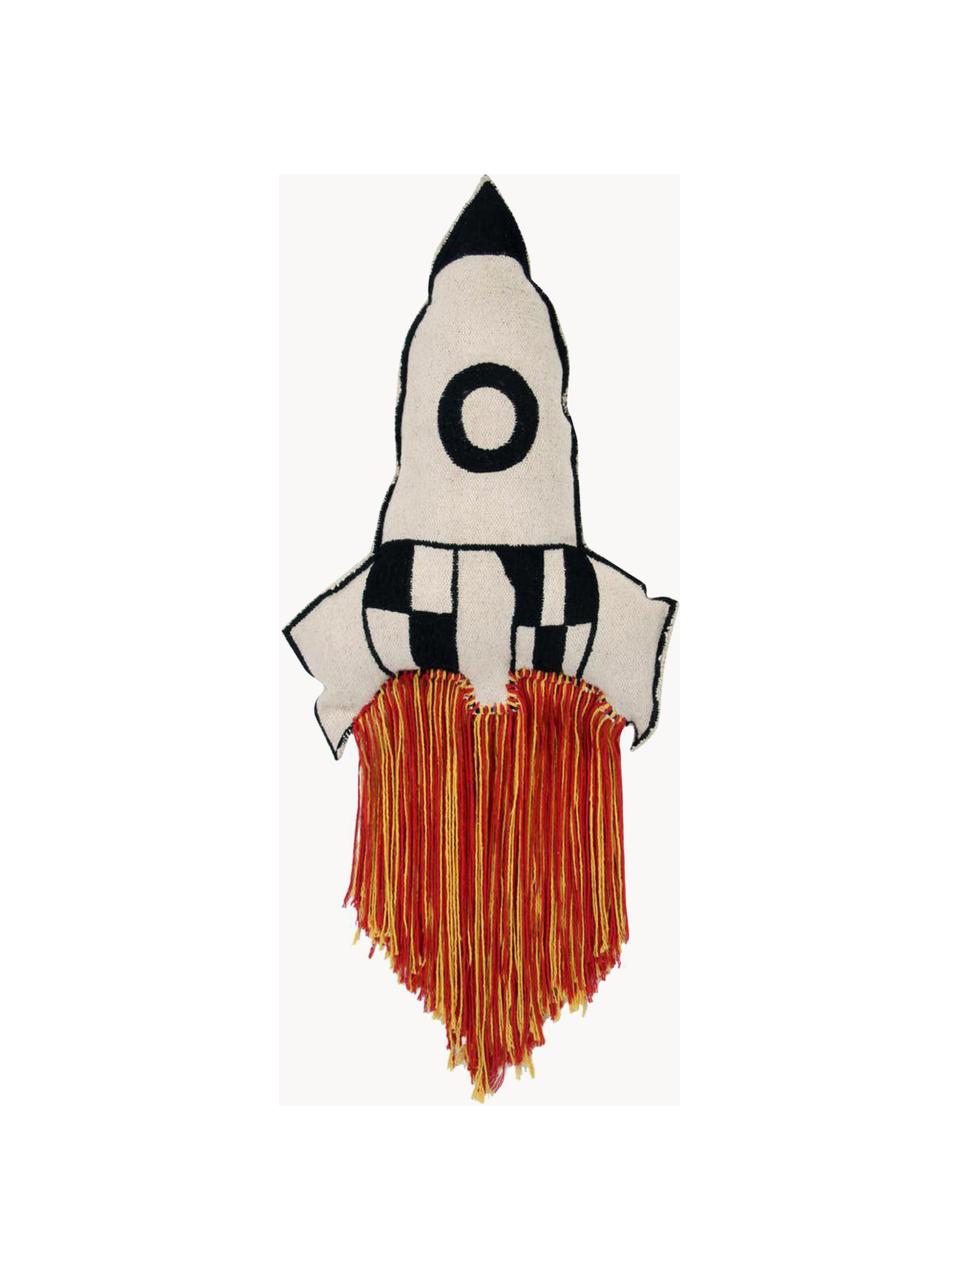 Cojín peluche artesanal Rocket, Funda: 97% algodón, 3% fibra sin, Rojo, naranja, blanco Off White, negro, An 65 x Al 30 cm